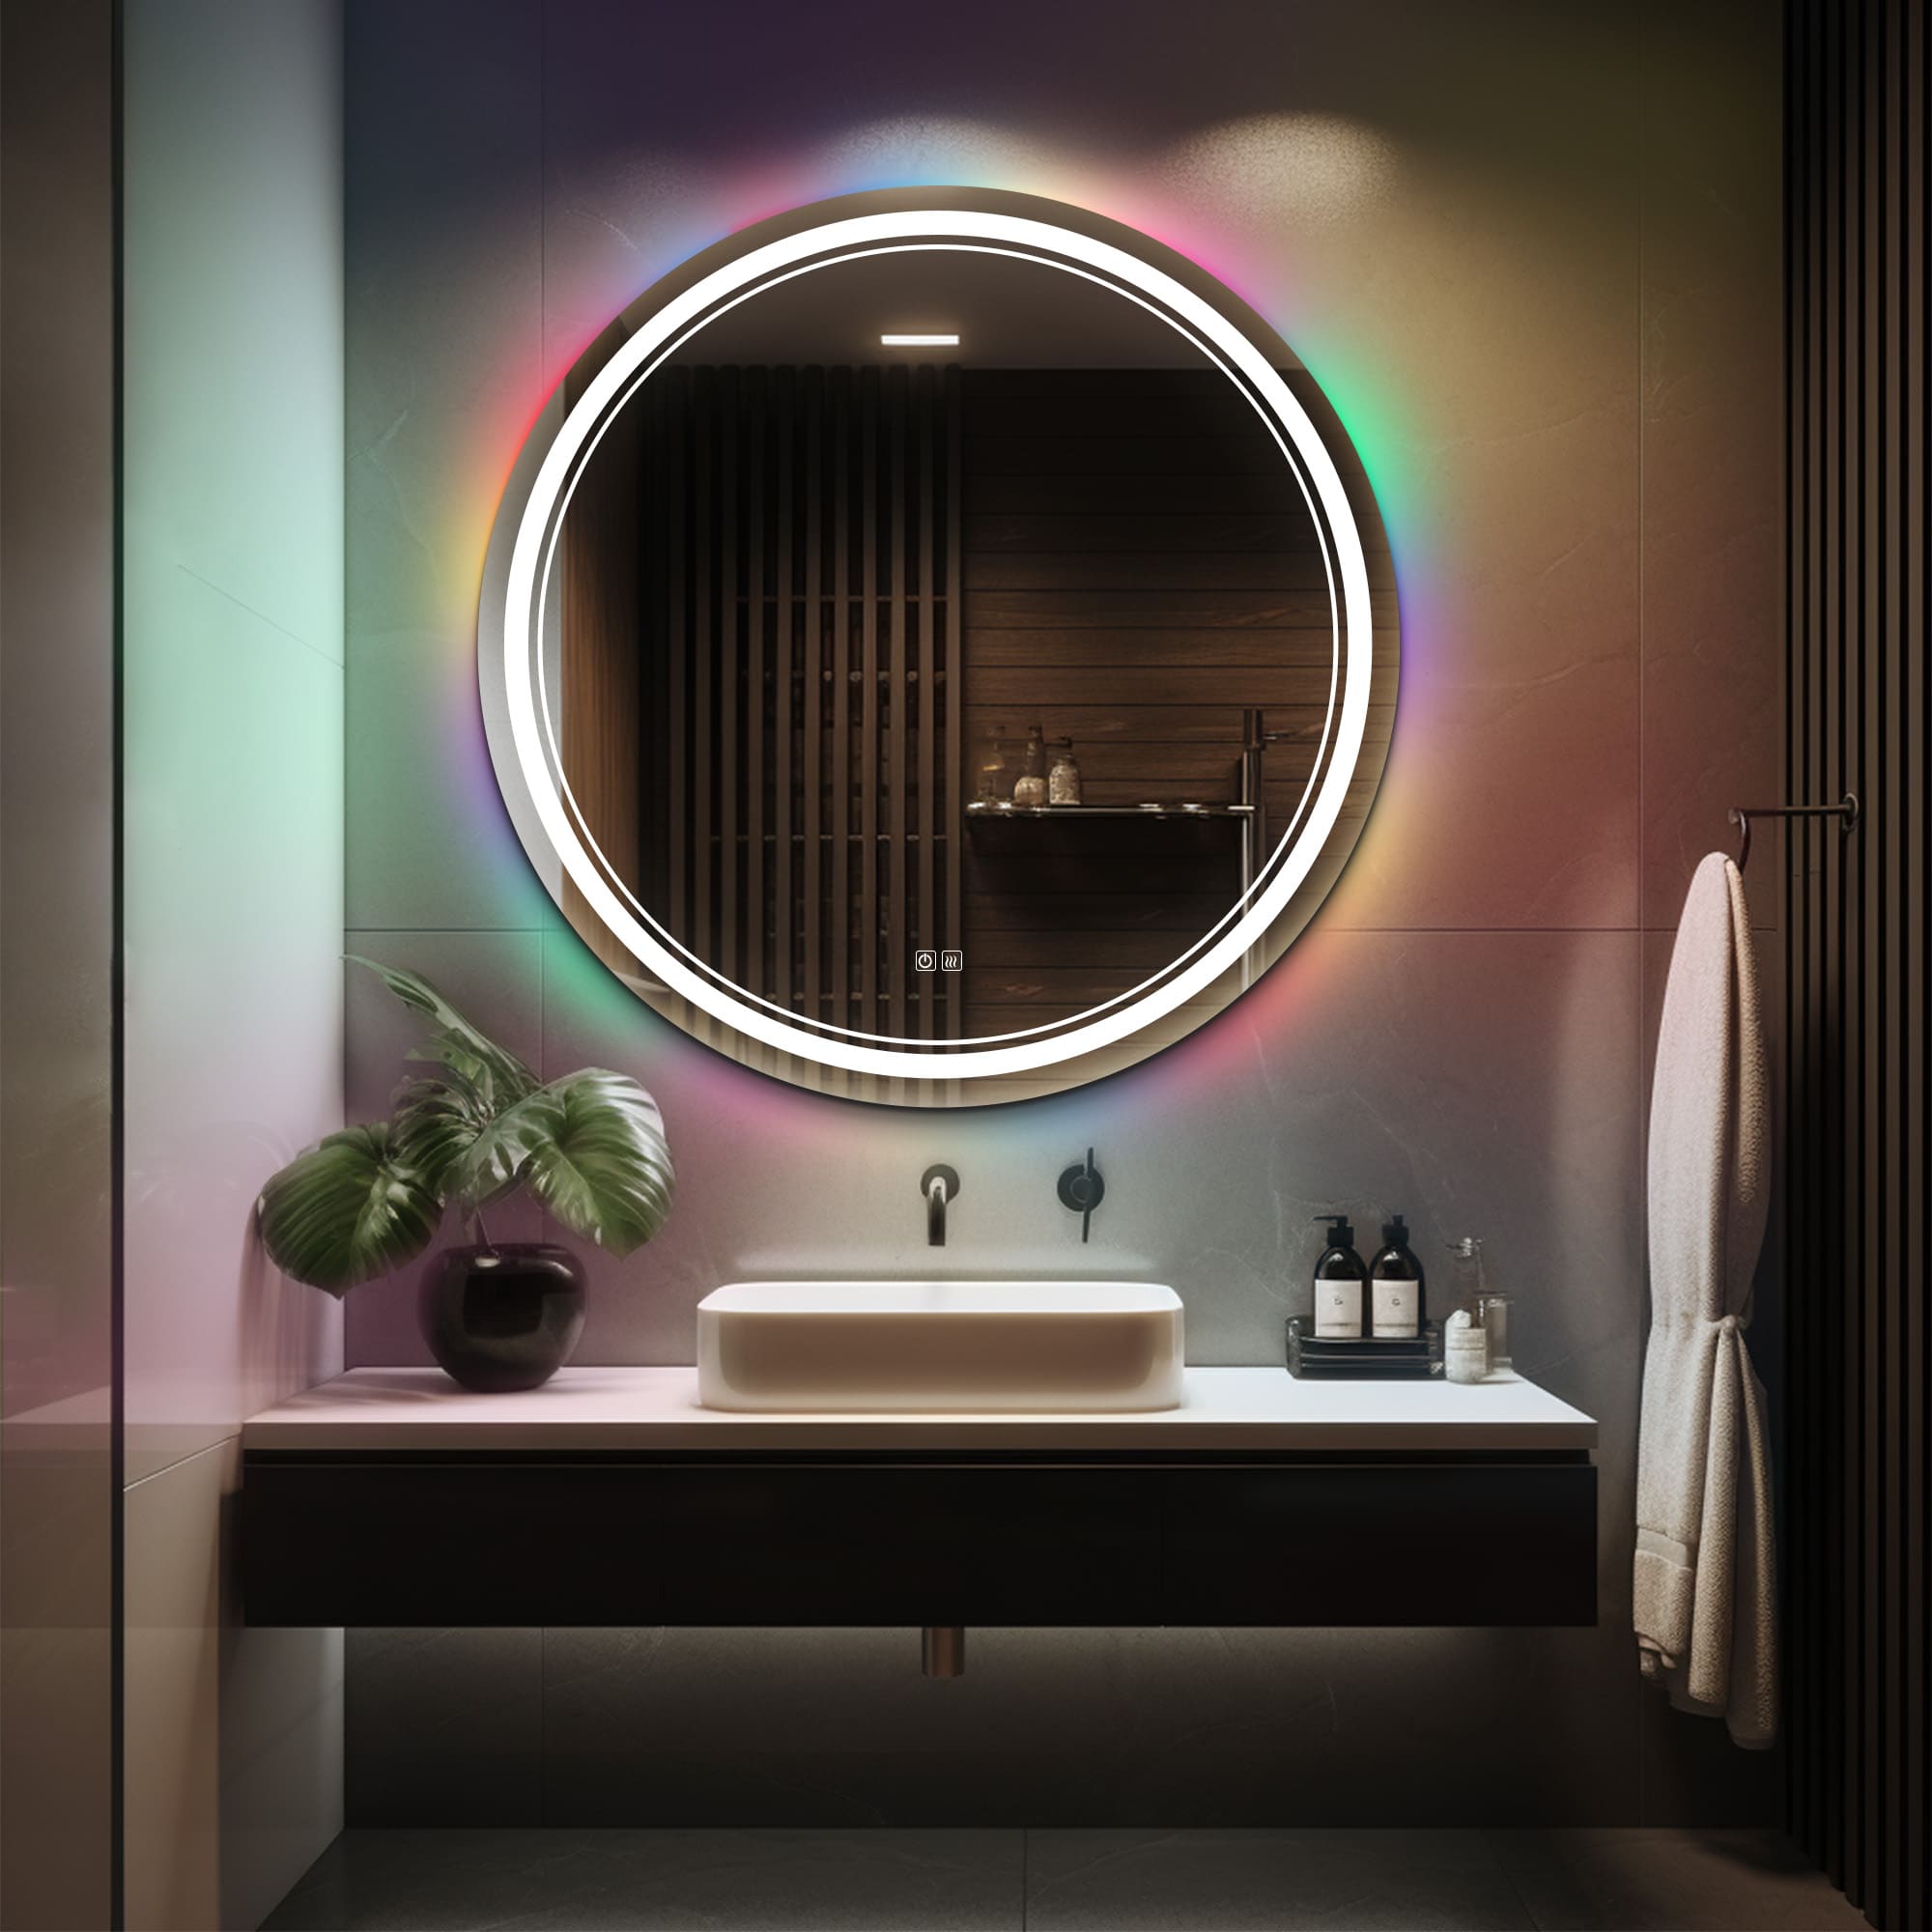 AITNE Round Custom LED Mirror with Backlight